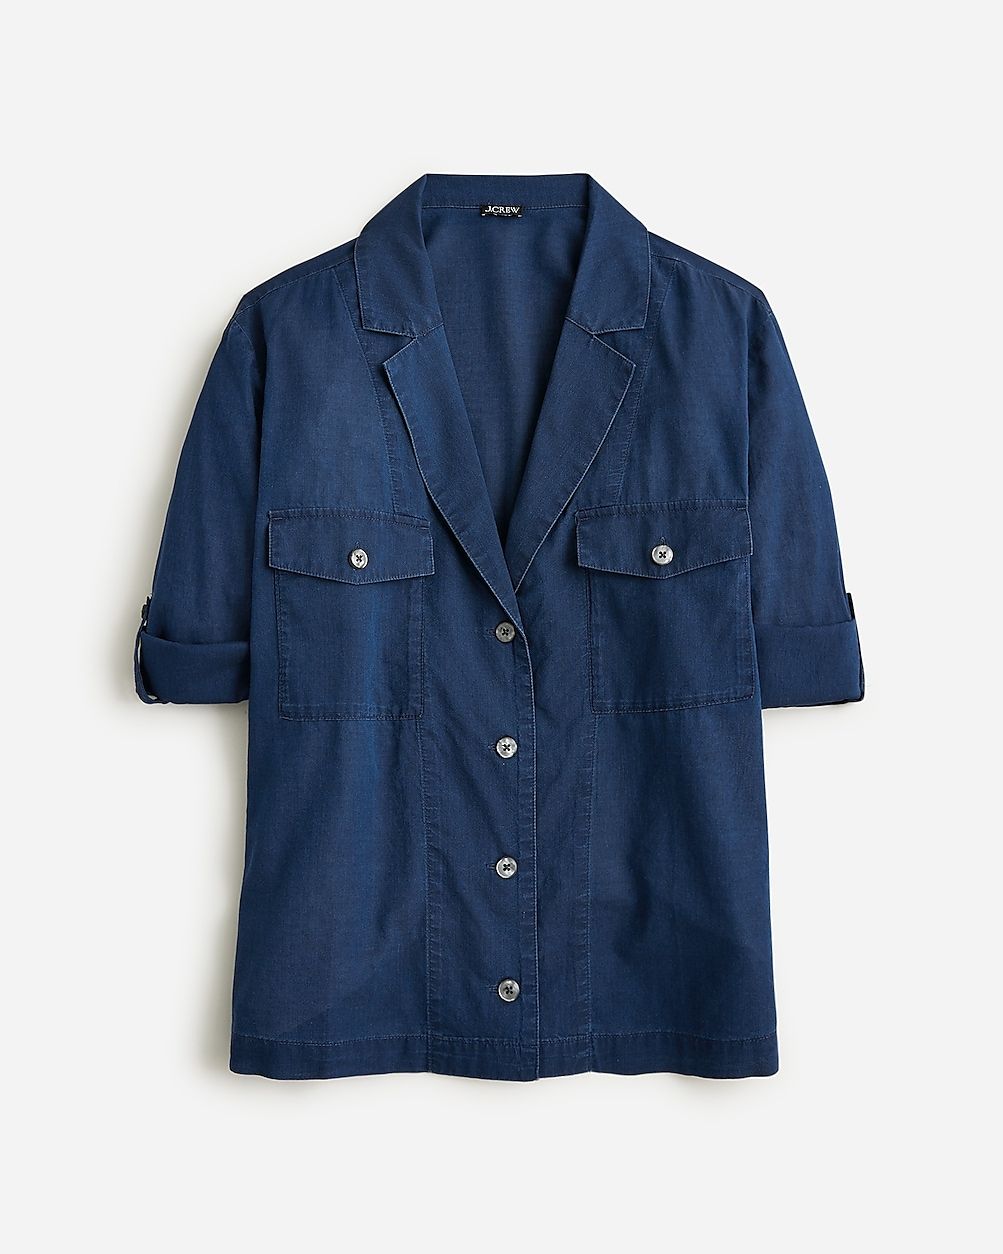 Camp-collar shirt in indigo cotton voile | J.Crew US